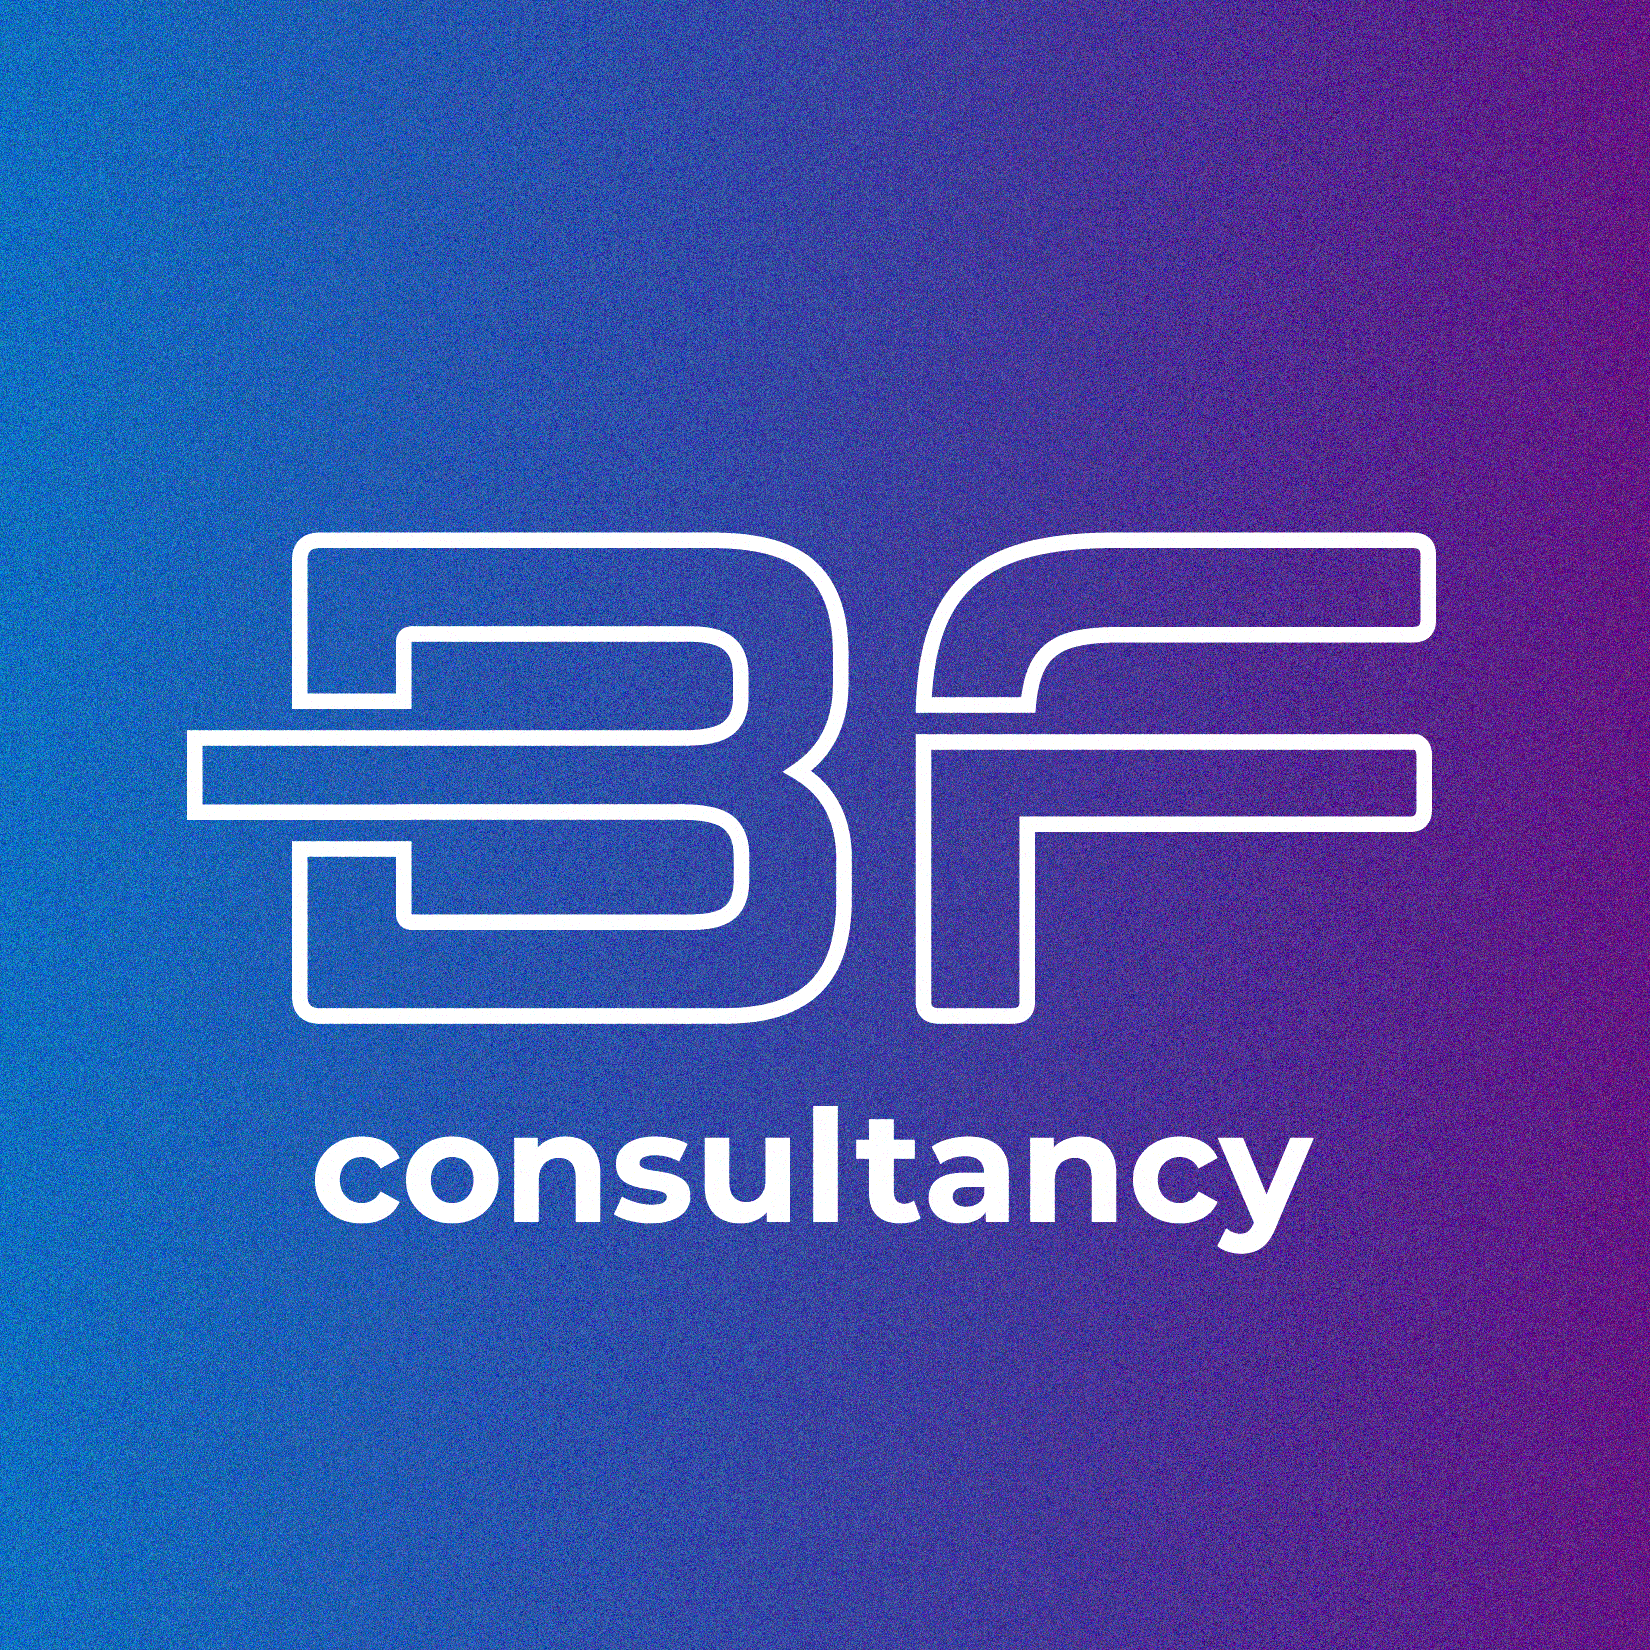  BF Consultancy 